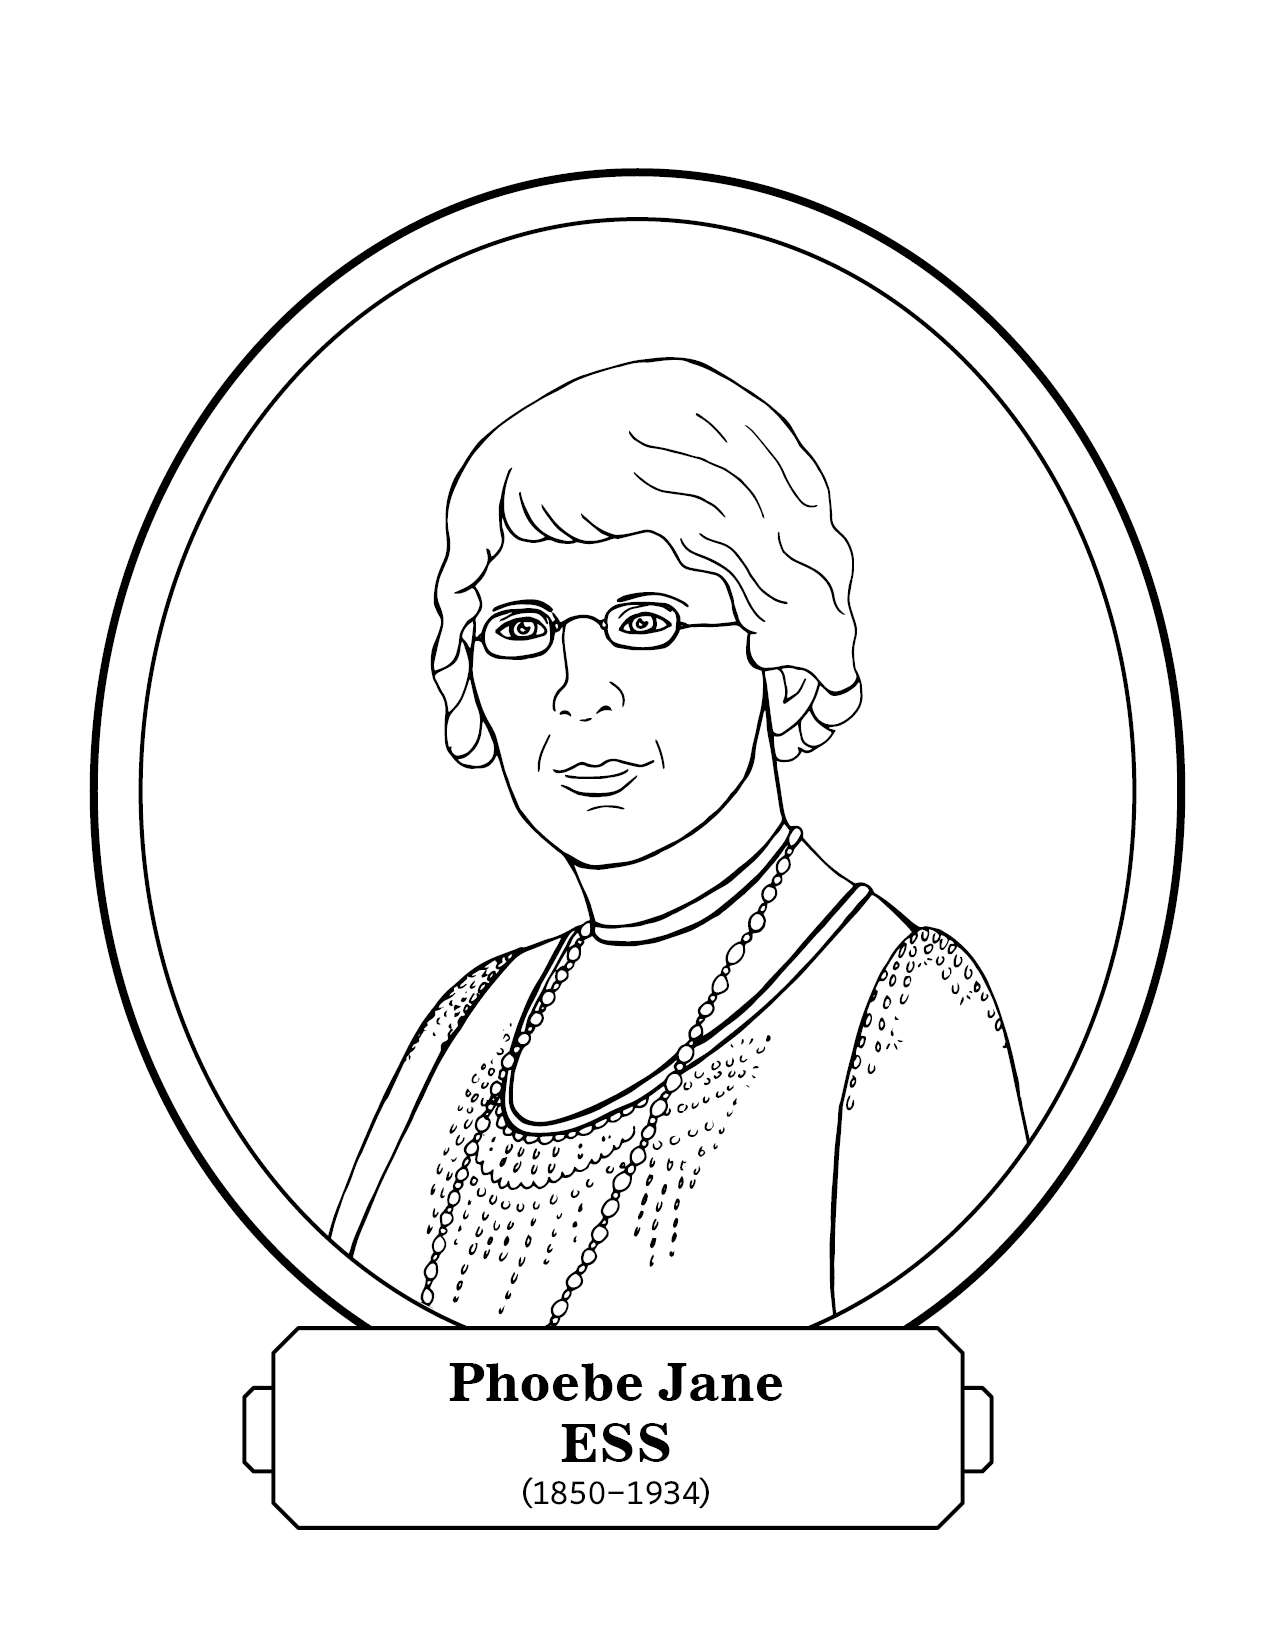 Phoebe Jane Ess